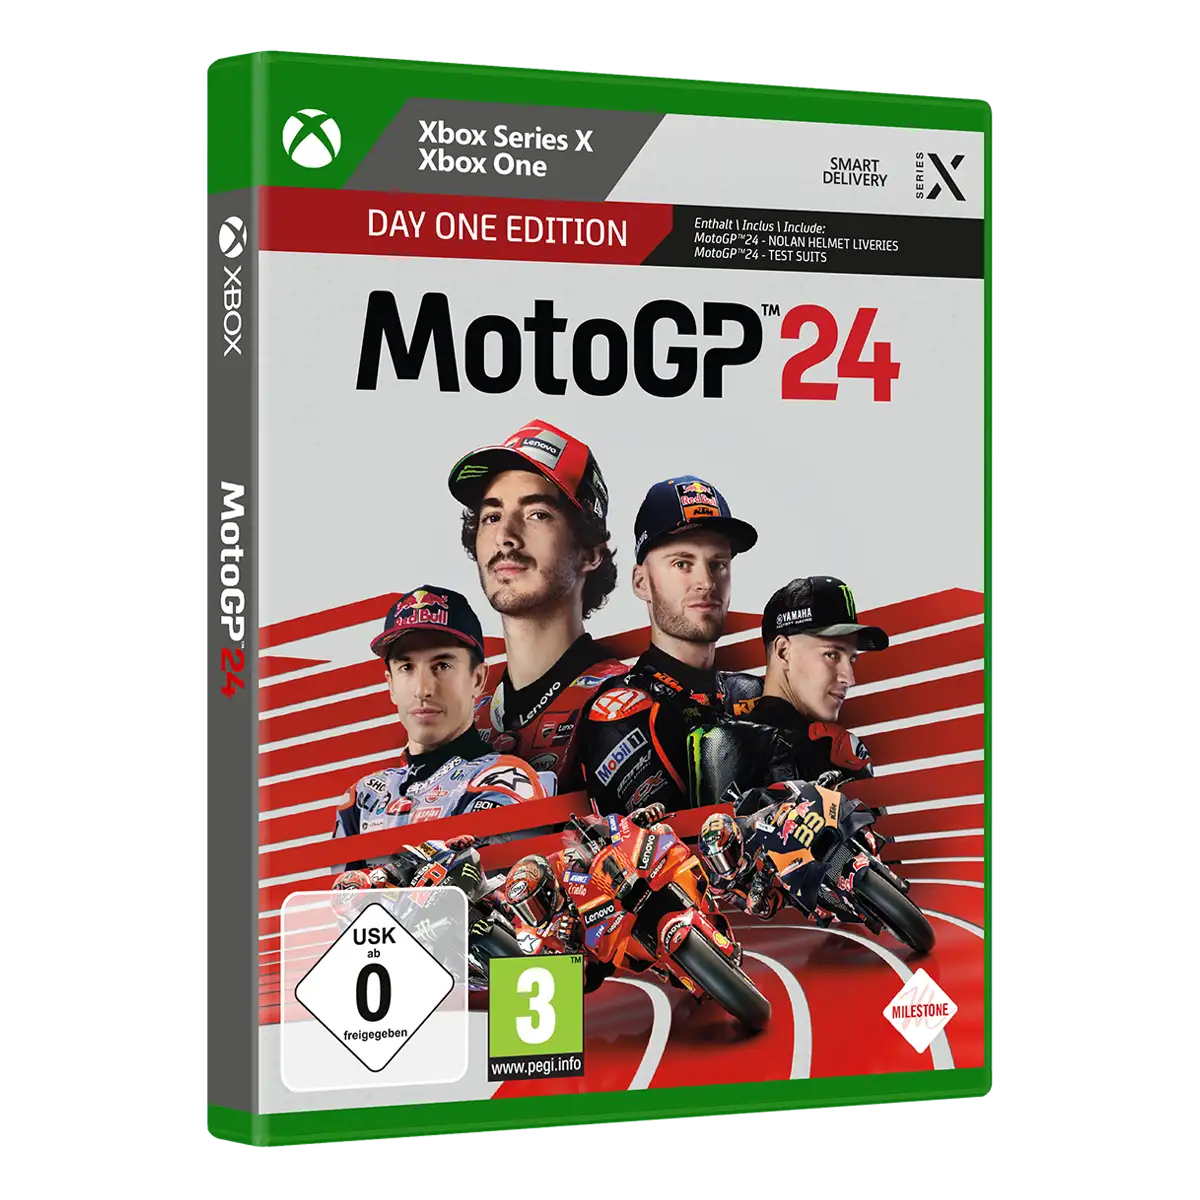 MotoGP 24 Day One Edition (XONE/XSRX) Image 2